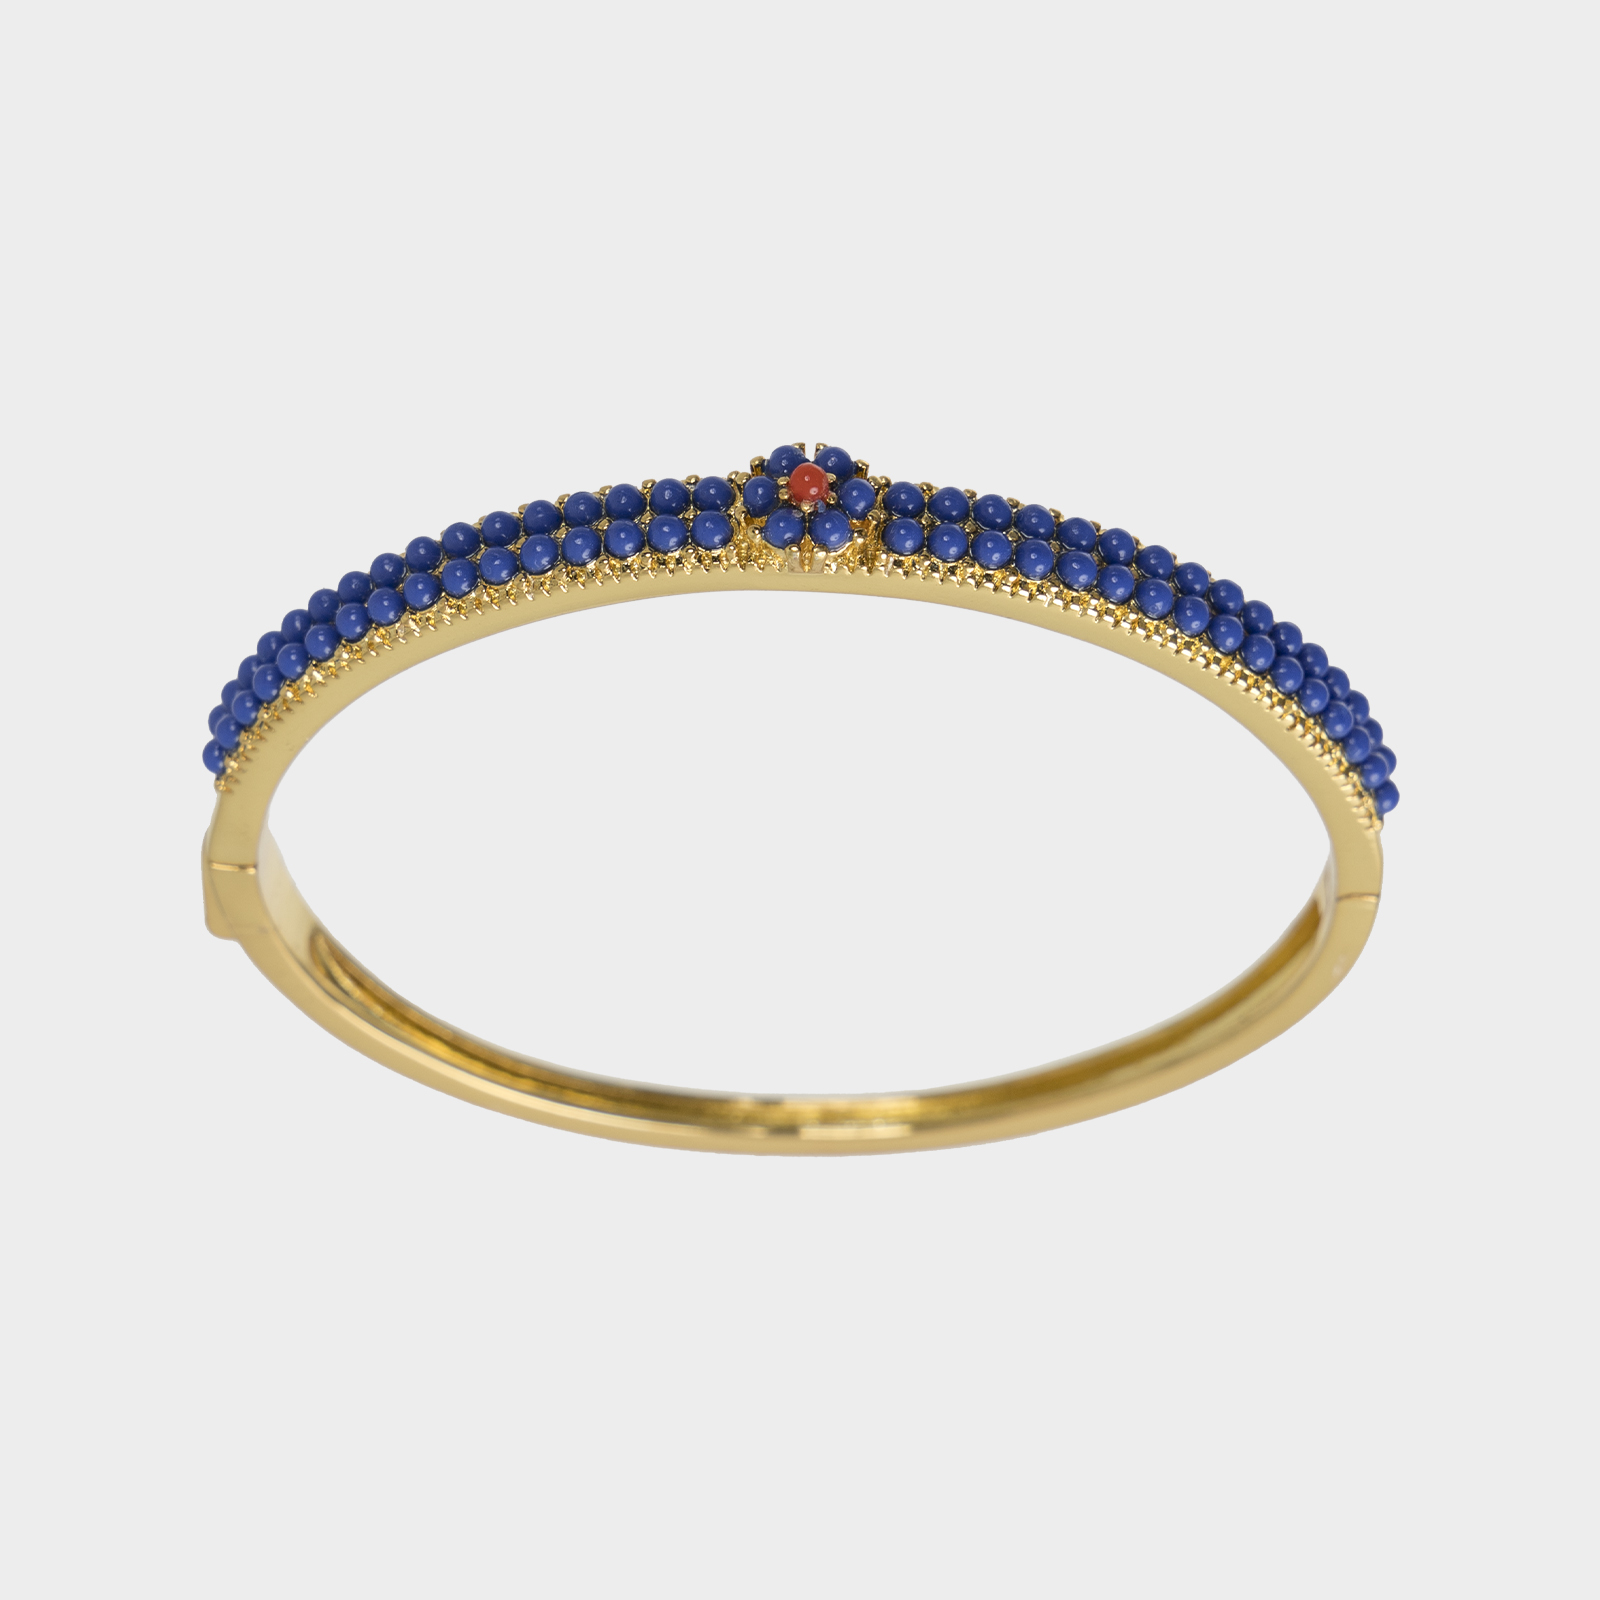 The Amazon Bracelet Blue